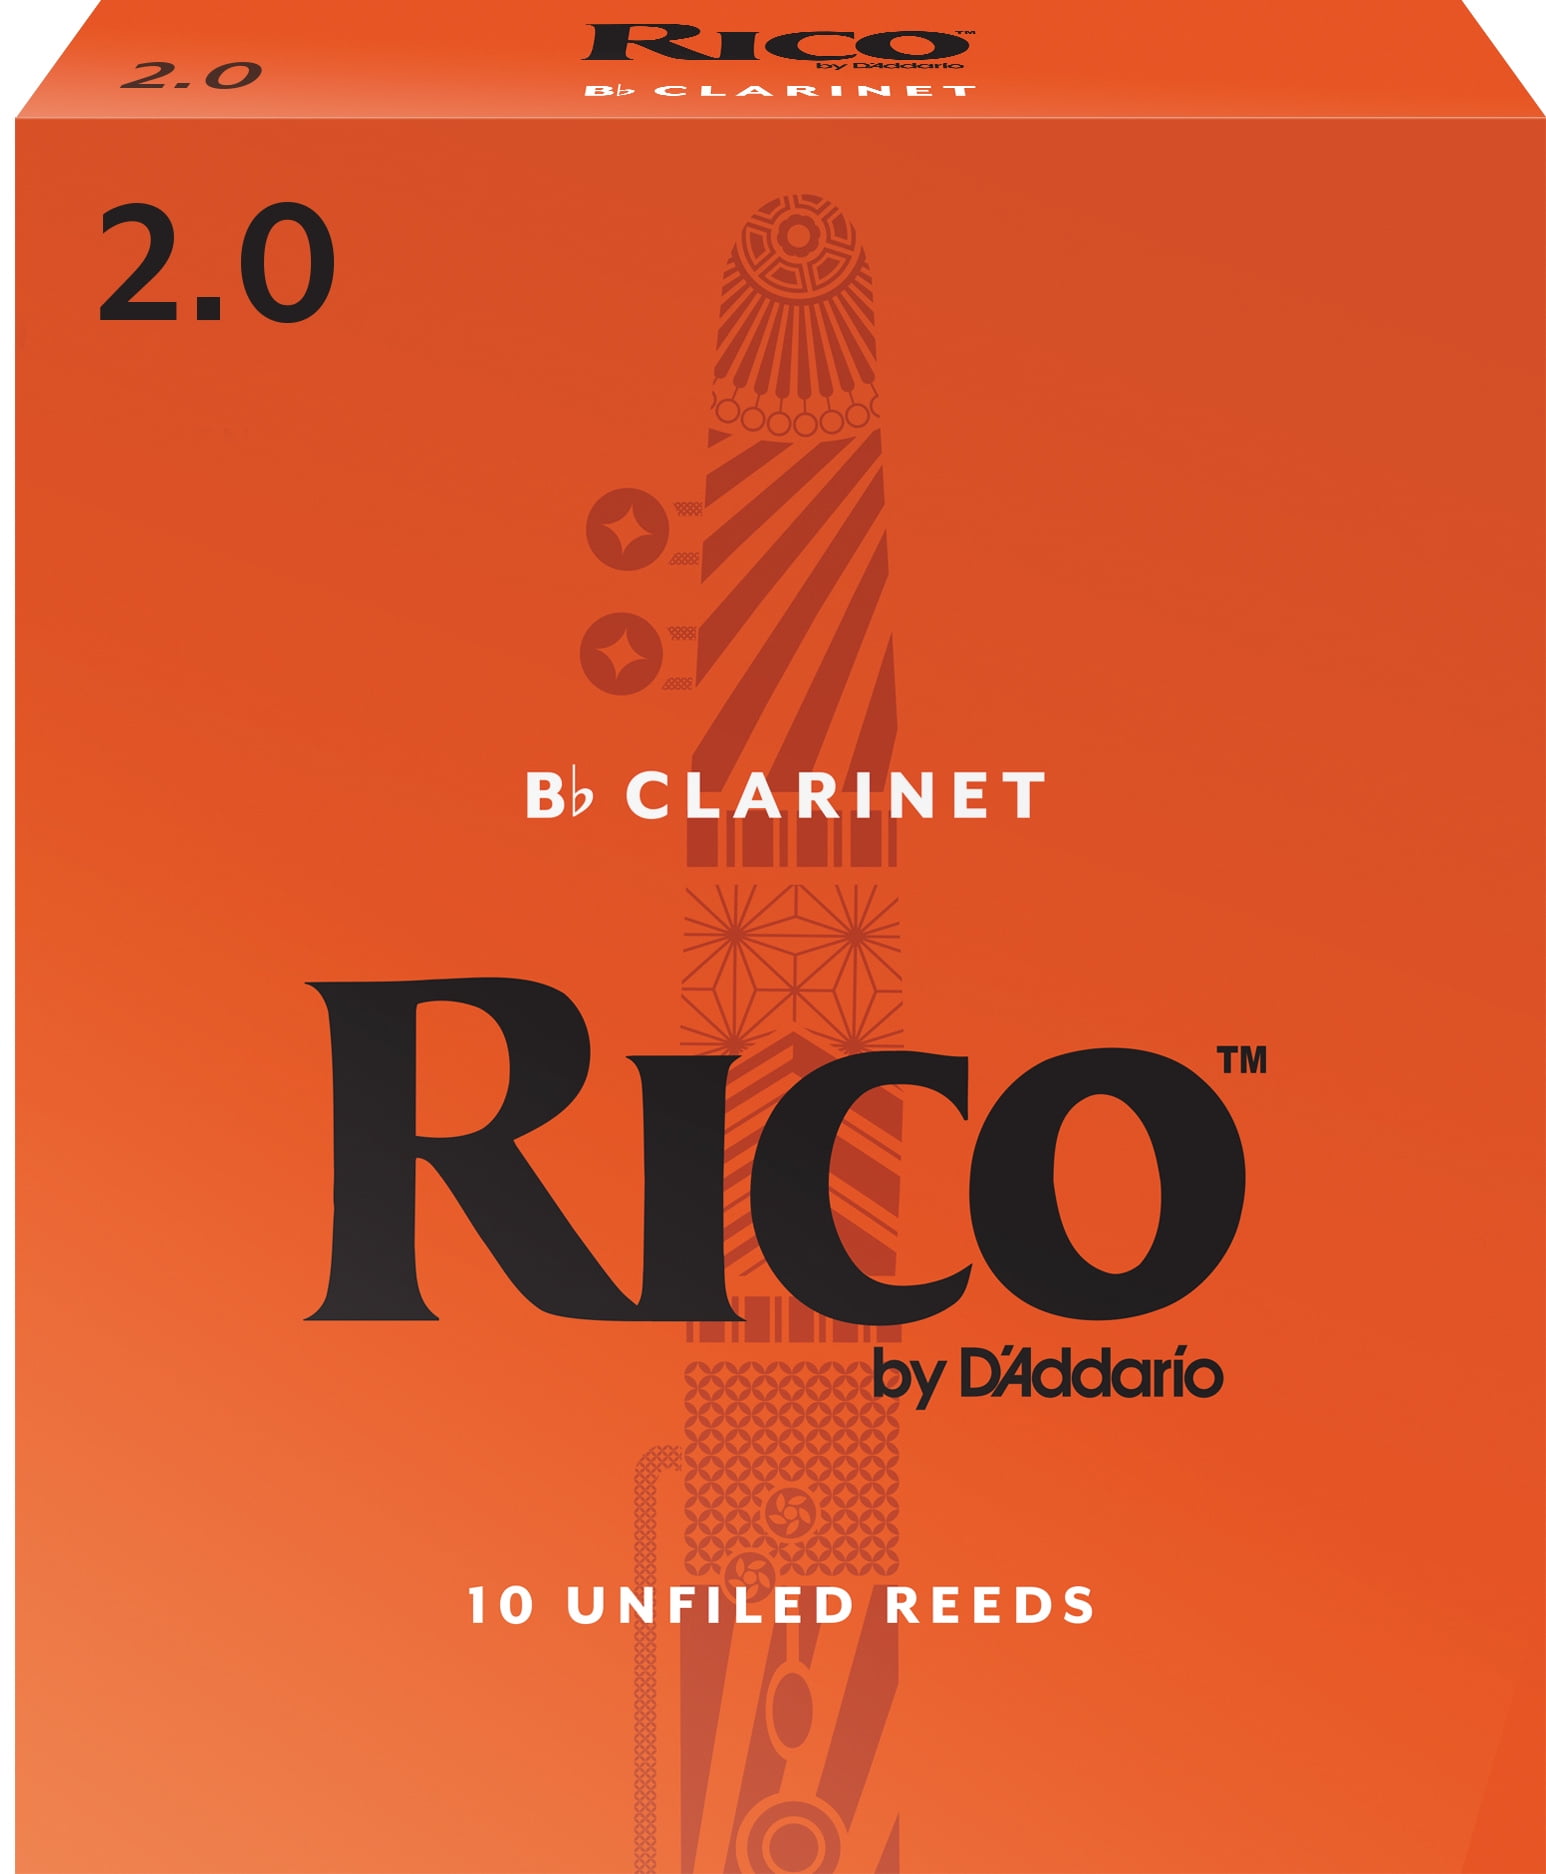 New Factory Sealed Box Rico Royal by D'Addario Clarinet Reeds #2.0 